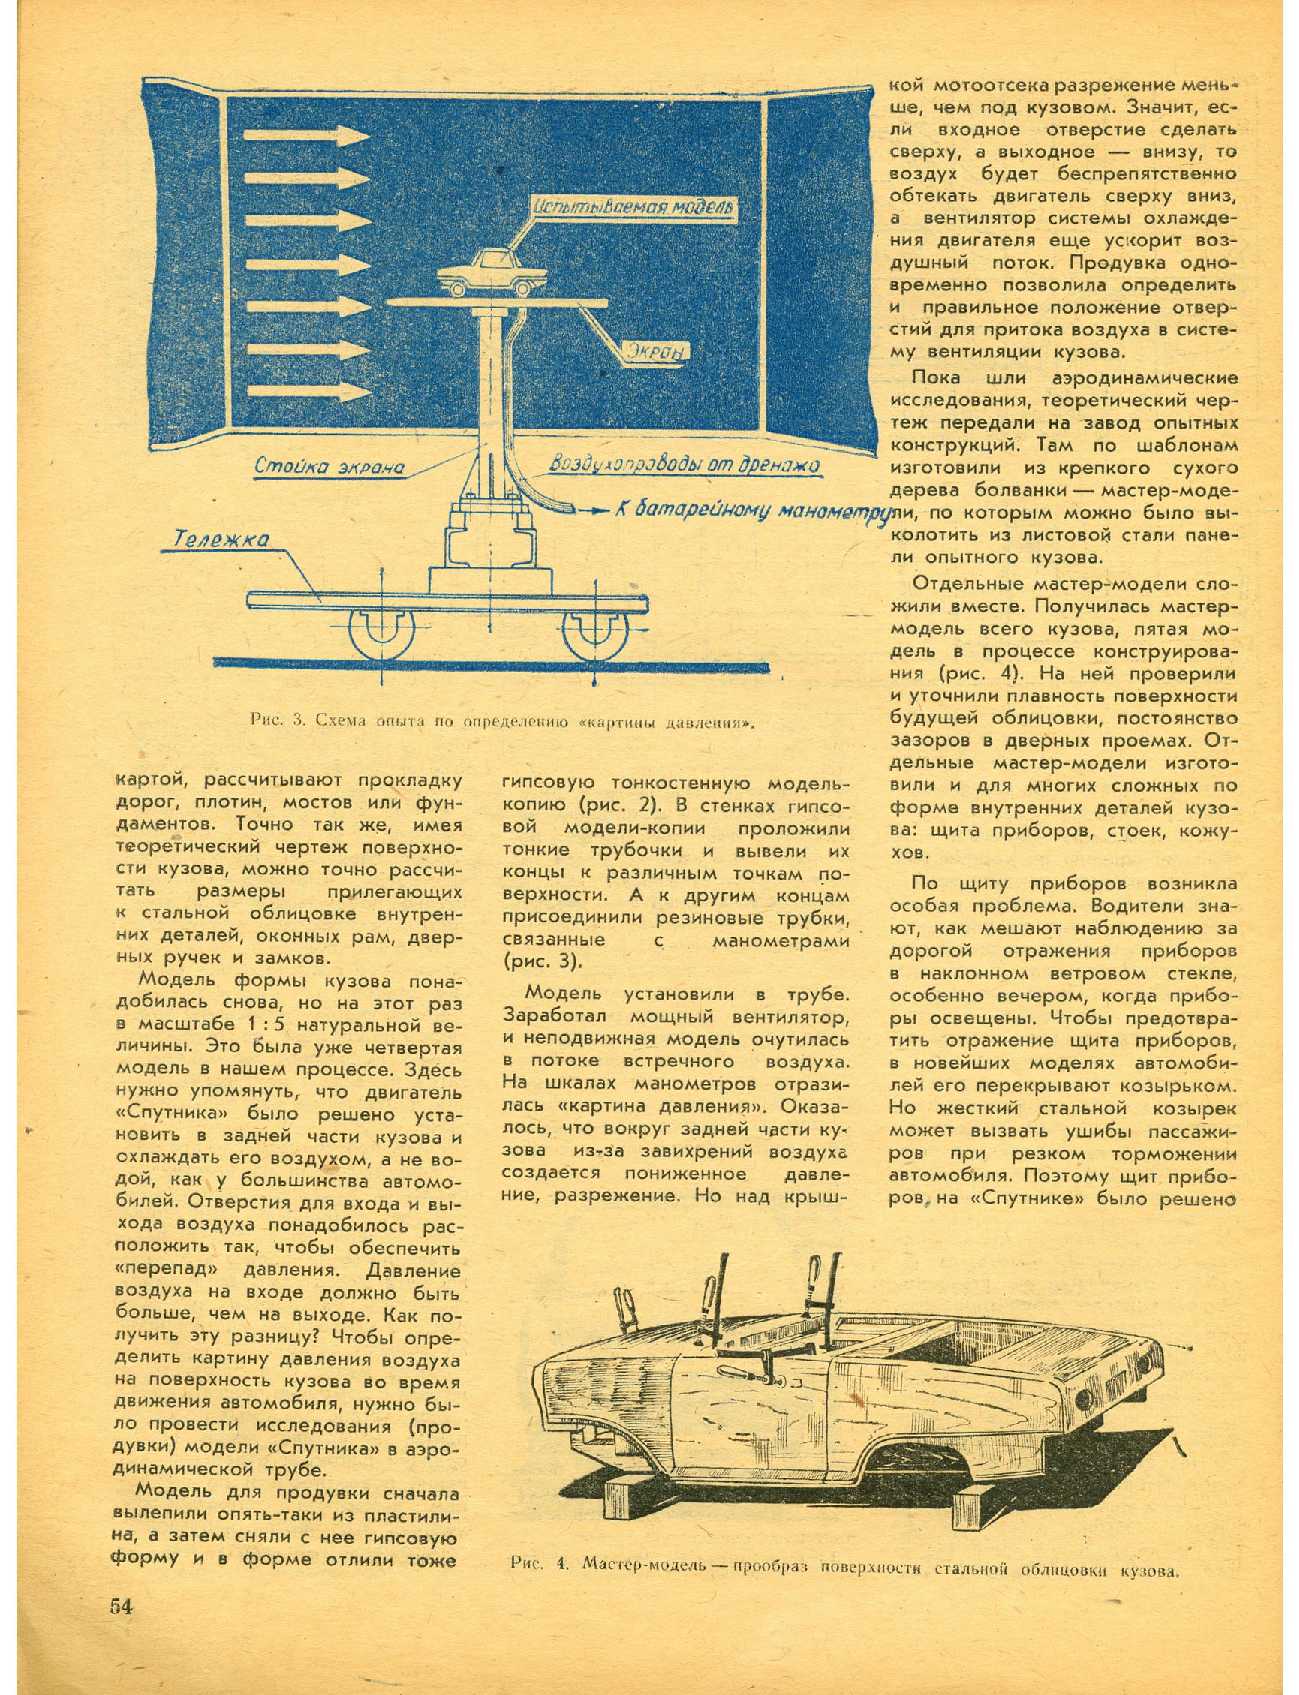 ЮМК 5, 1963, 54 c.